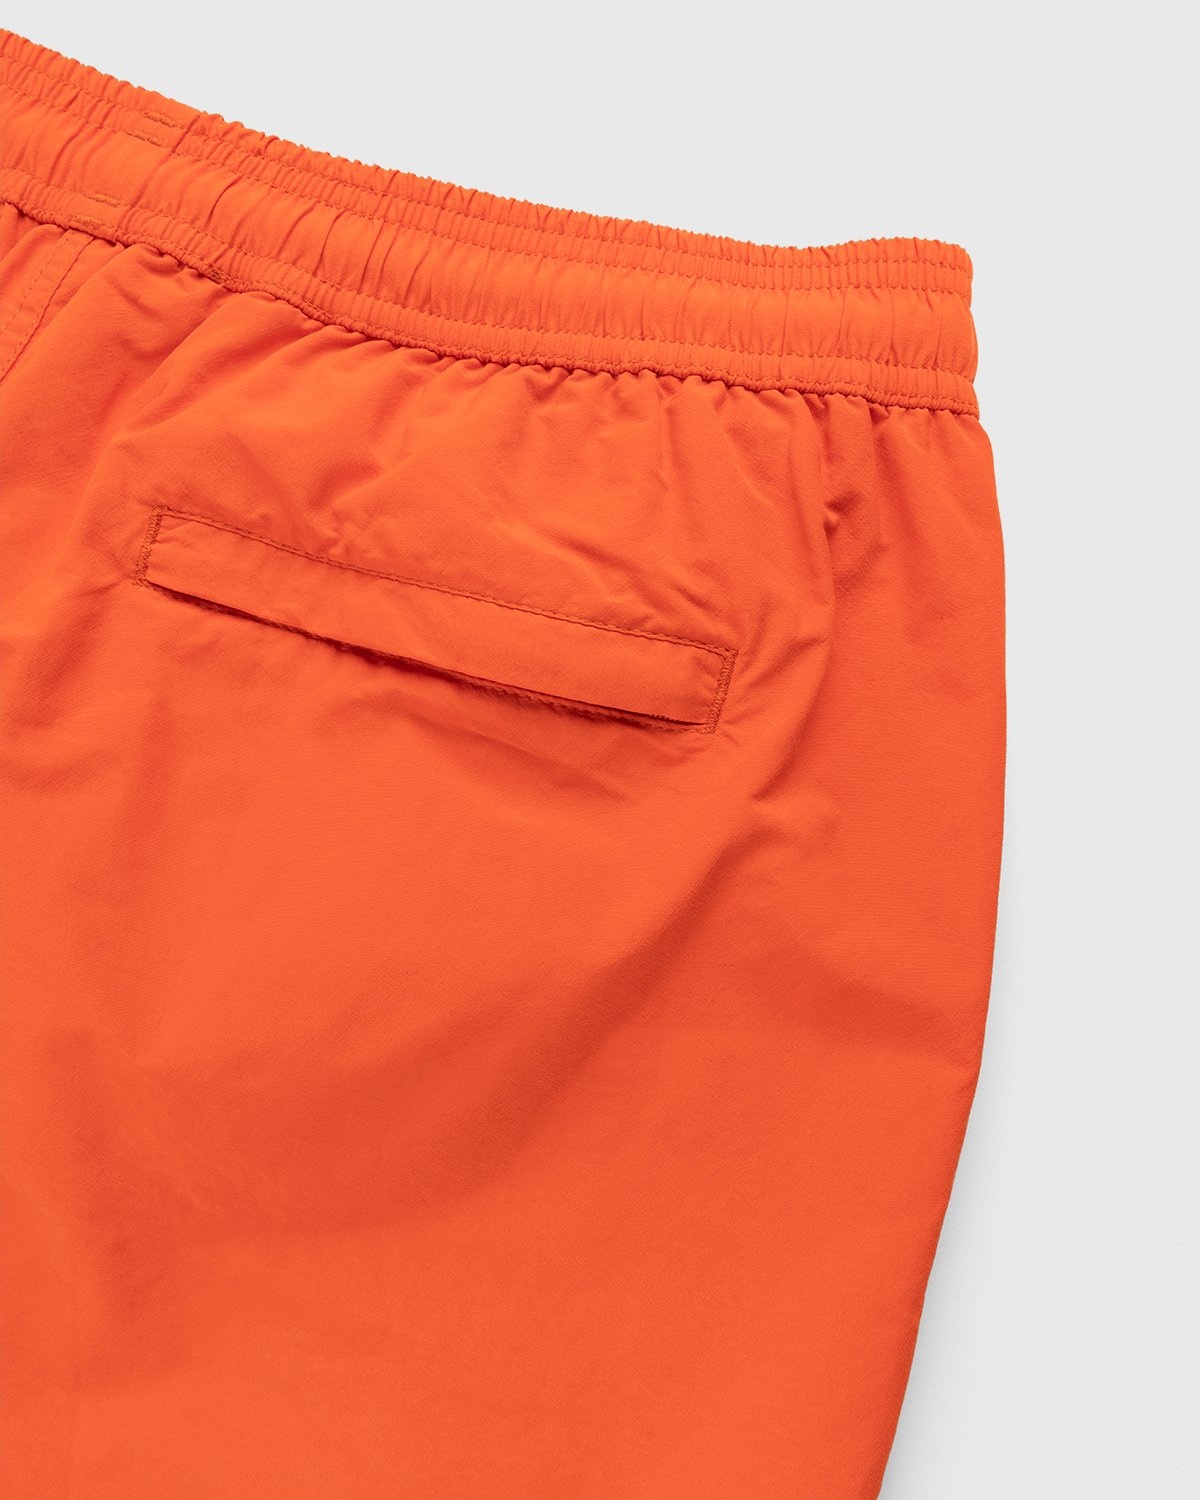 A-Cold-Wall* – Natant Nylon Short Rich Orange - Shorts - Orange - Image 3